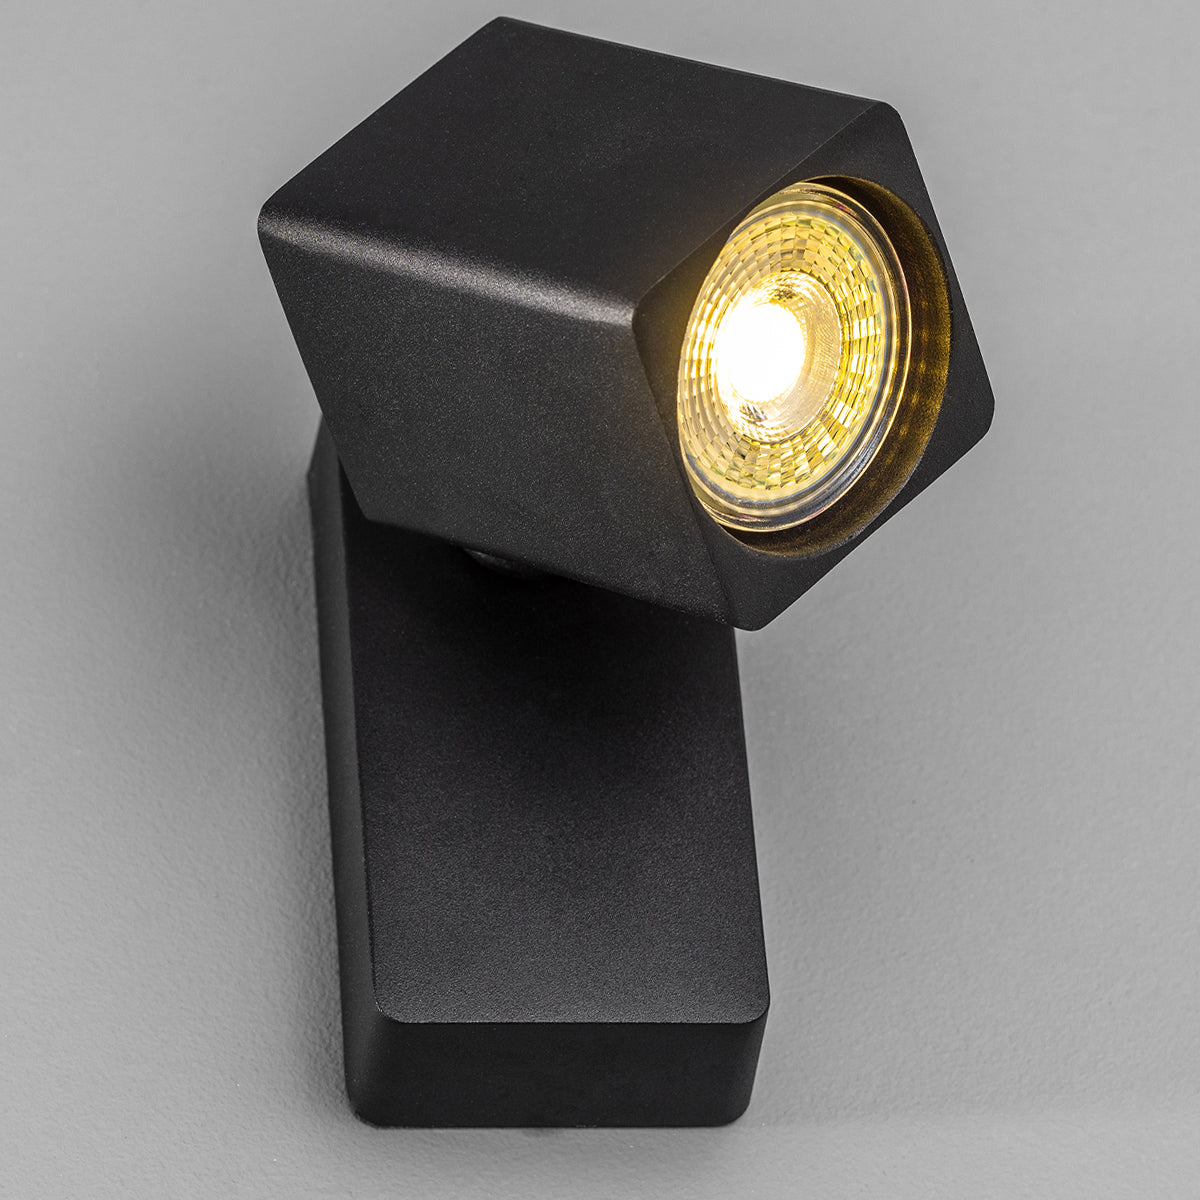 CGC ROSA Black Square Spotlight With Adjustable Head